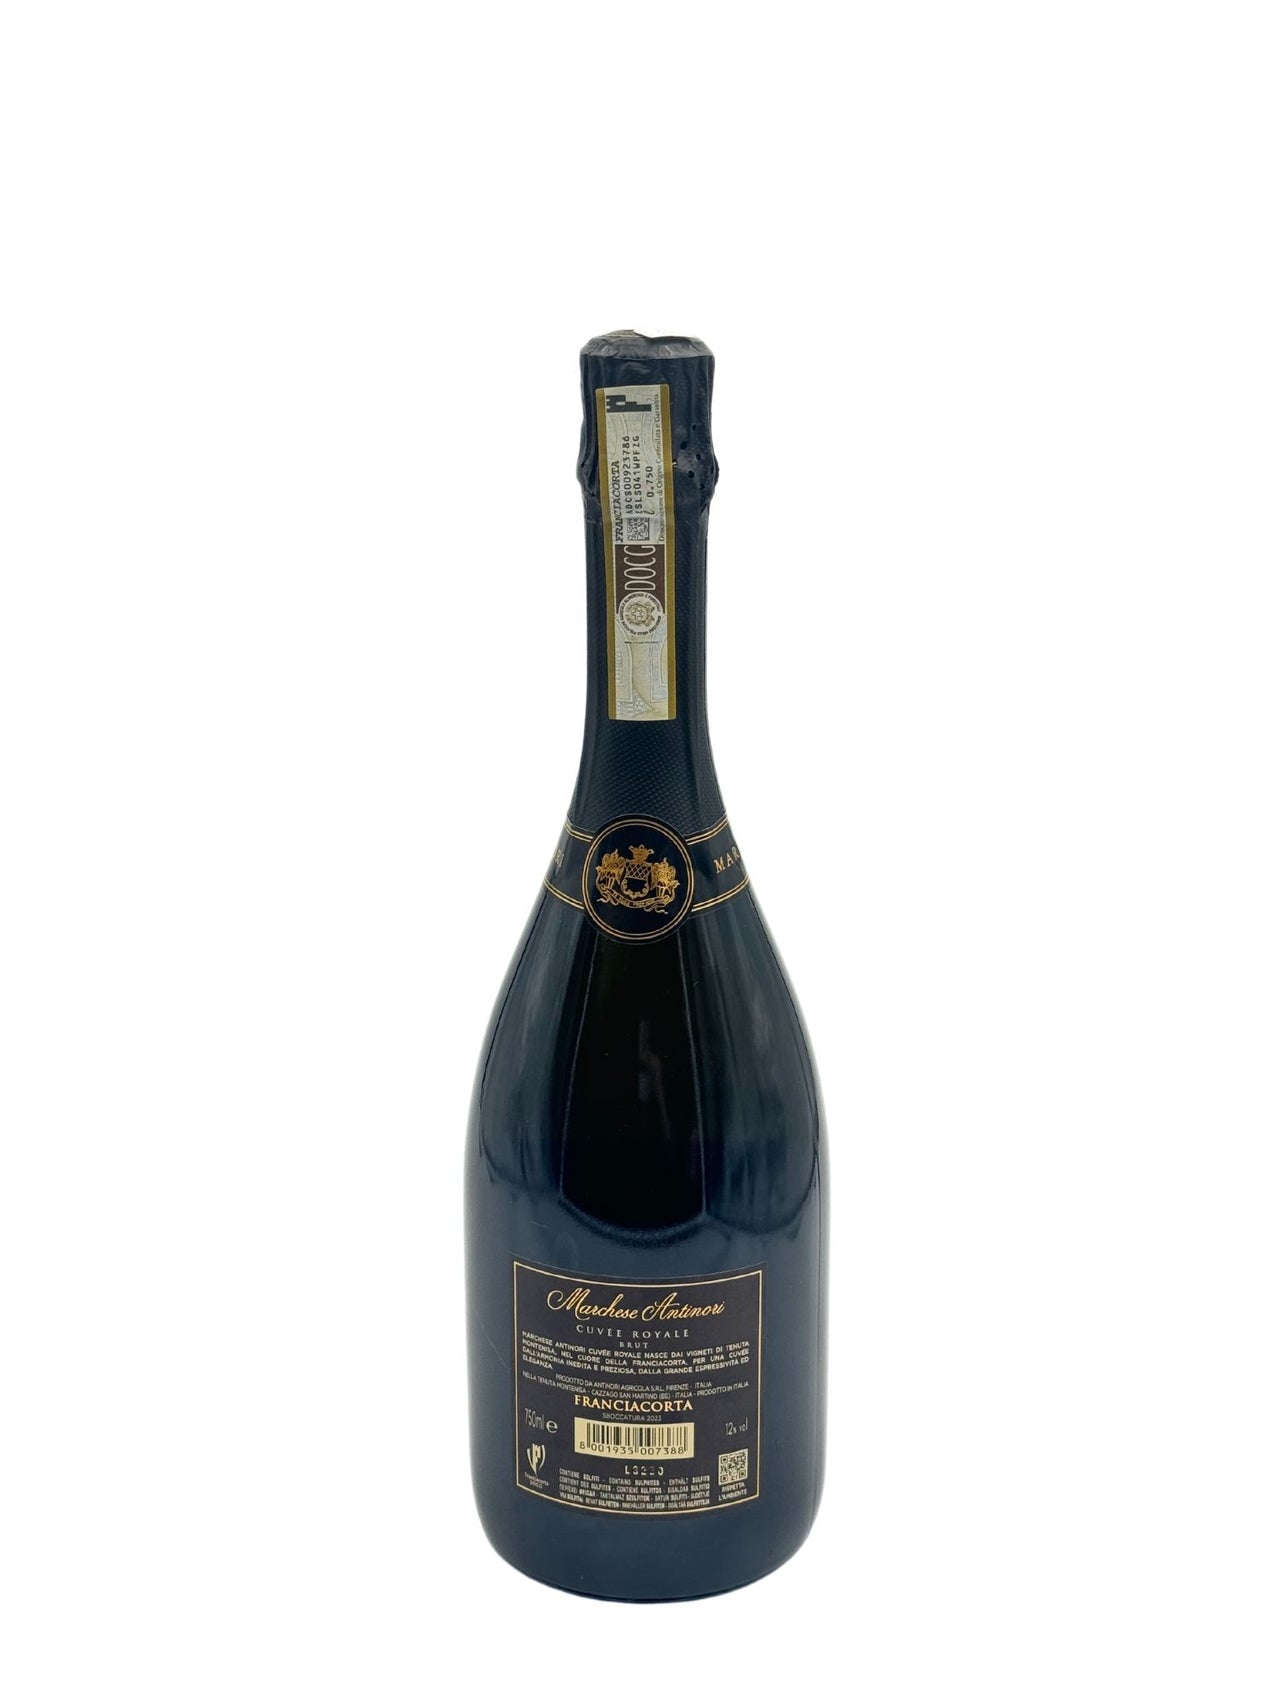 Cuvée Royale Franciacorta - Marchese Antinori - Rosato Vini 2